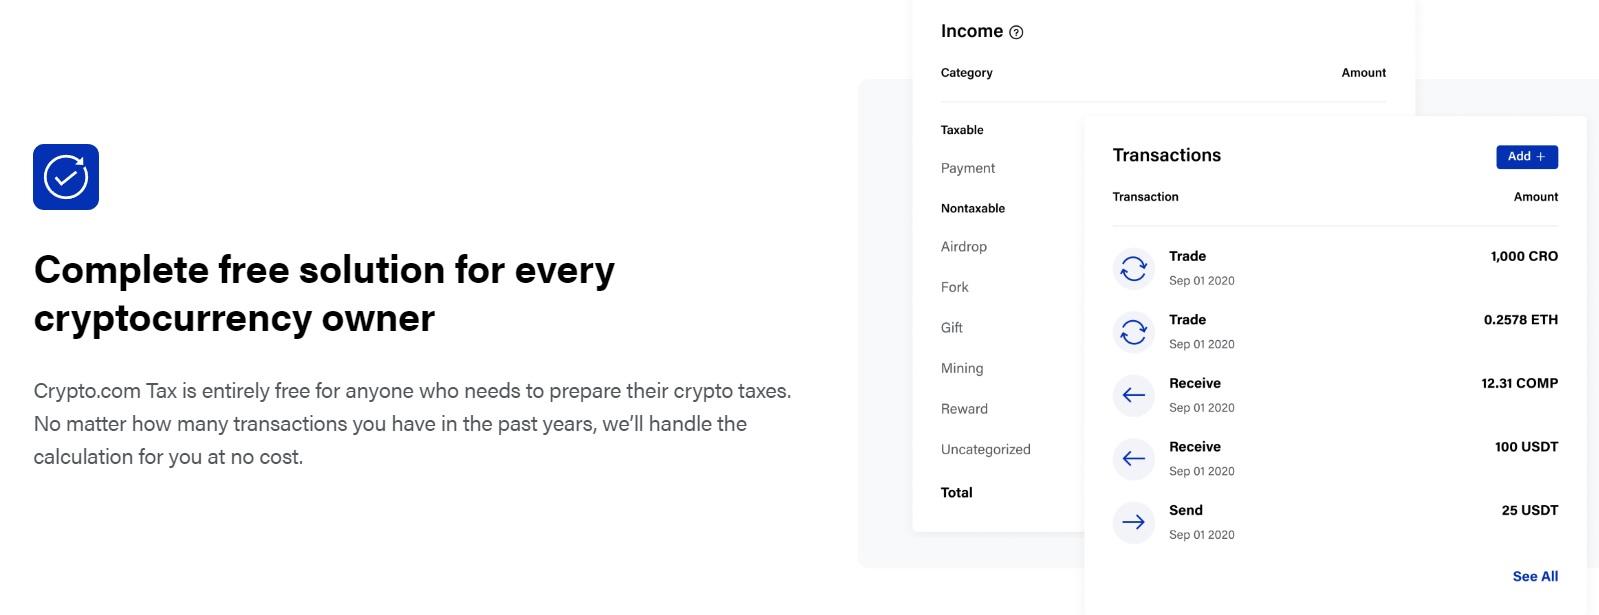 Crypto.com Tax user interface